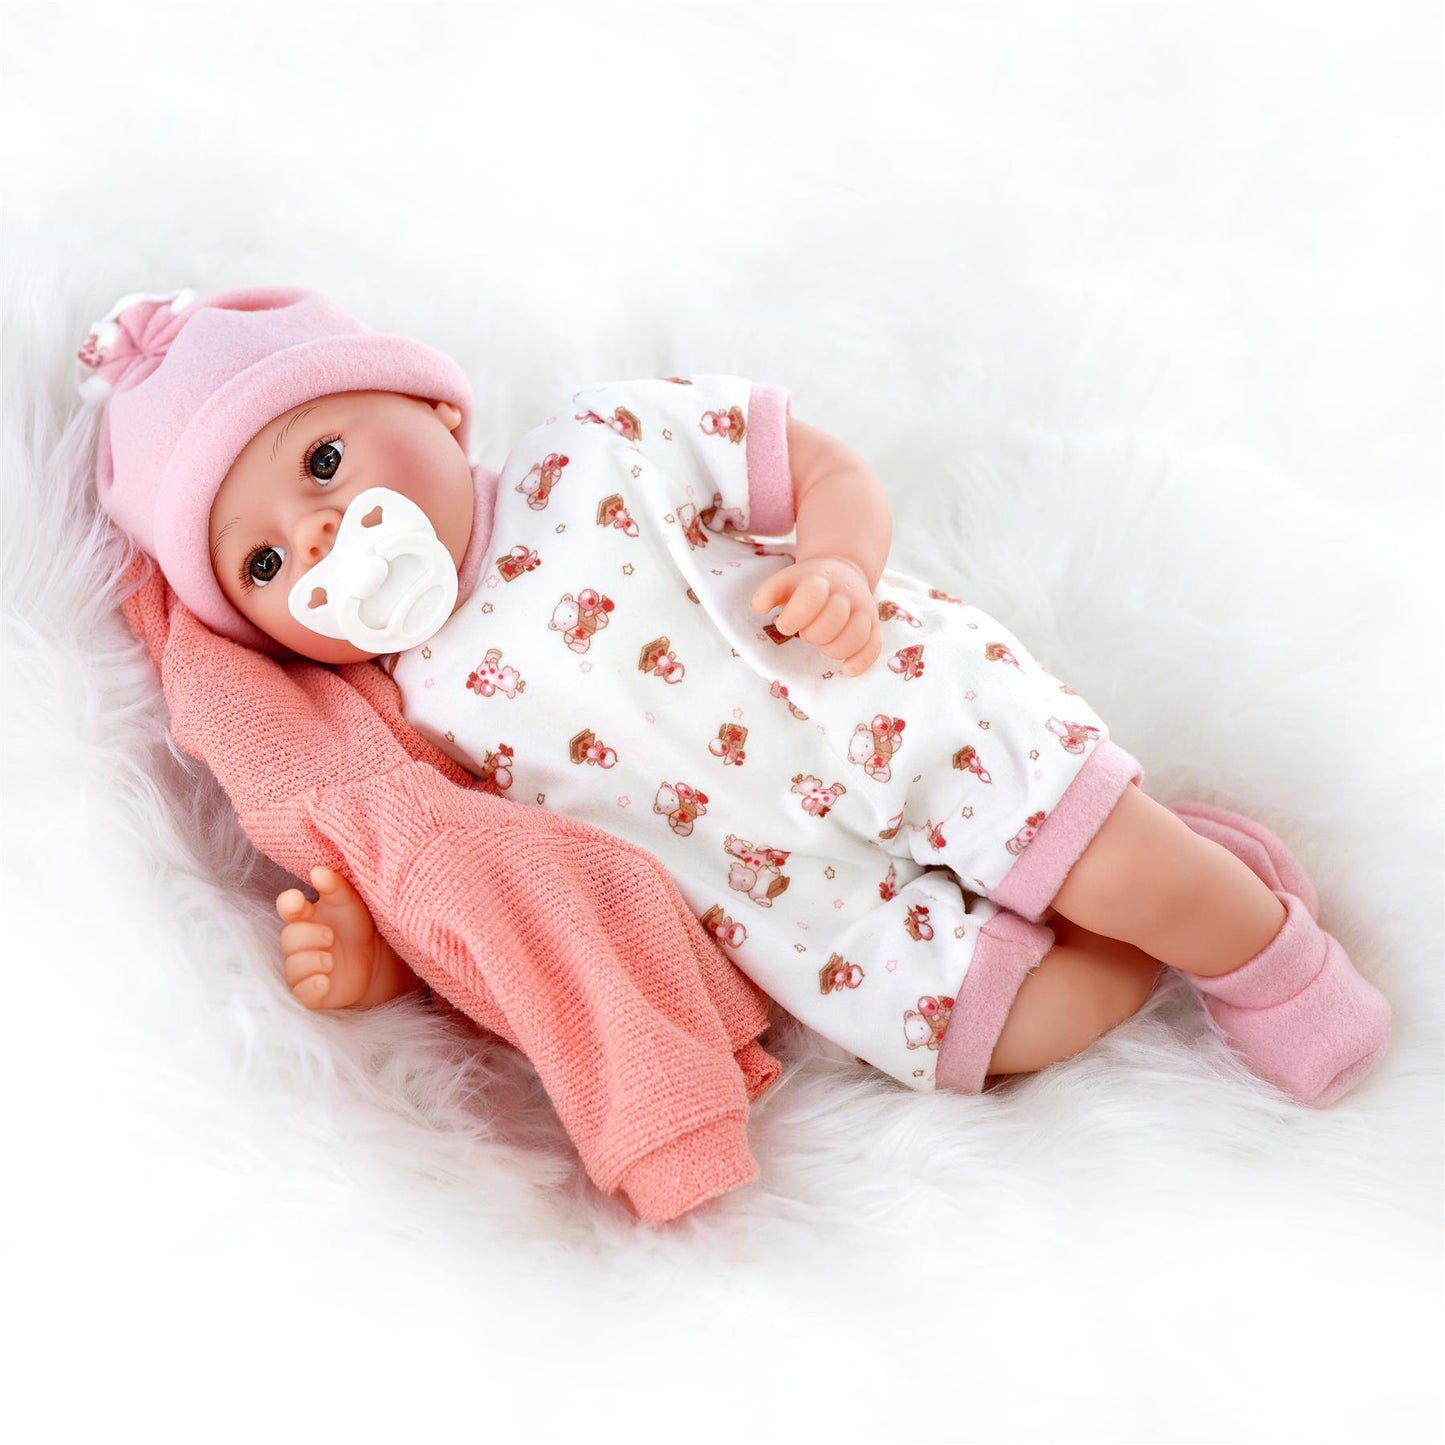 Baby Doll With Dummy & Sounds Peach by BiBi Doll - UKBuyZone